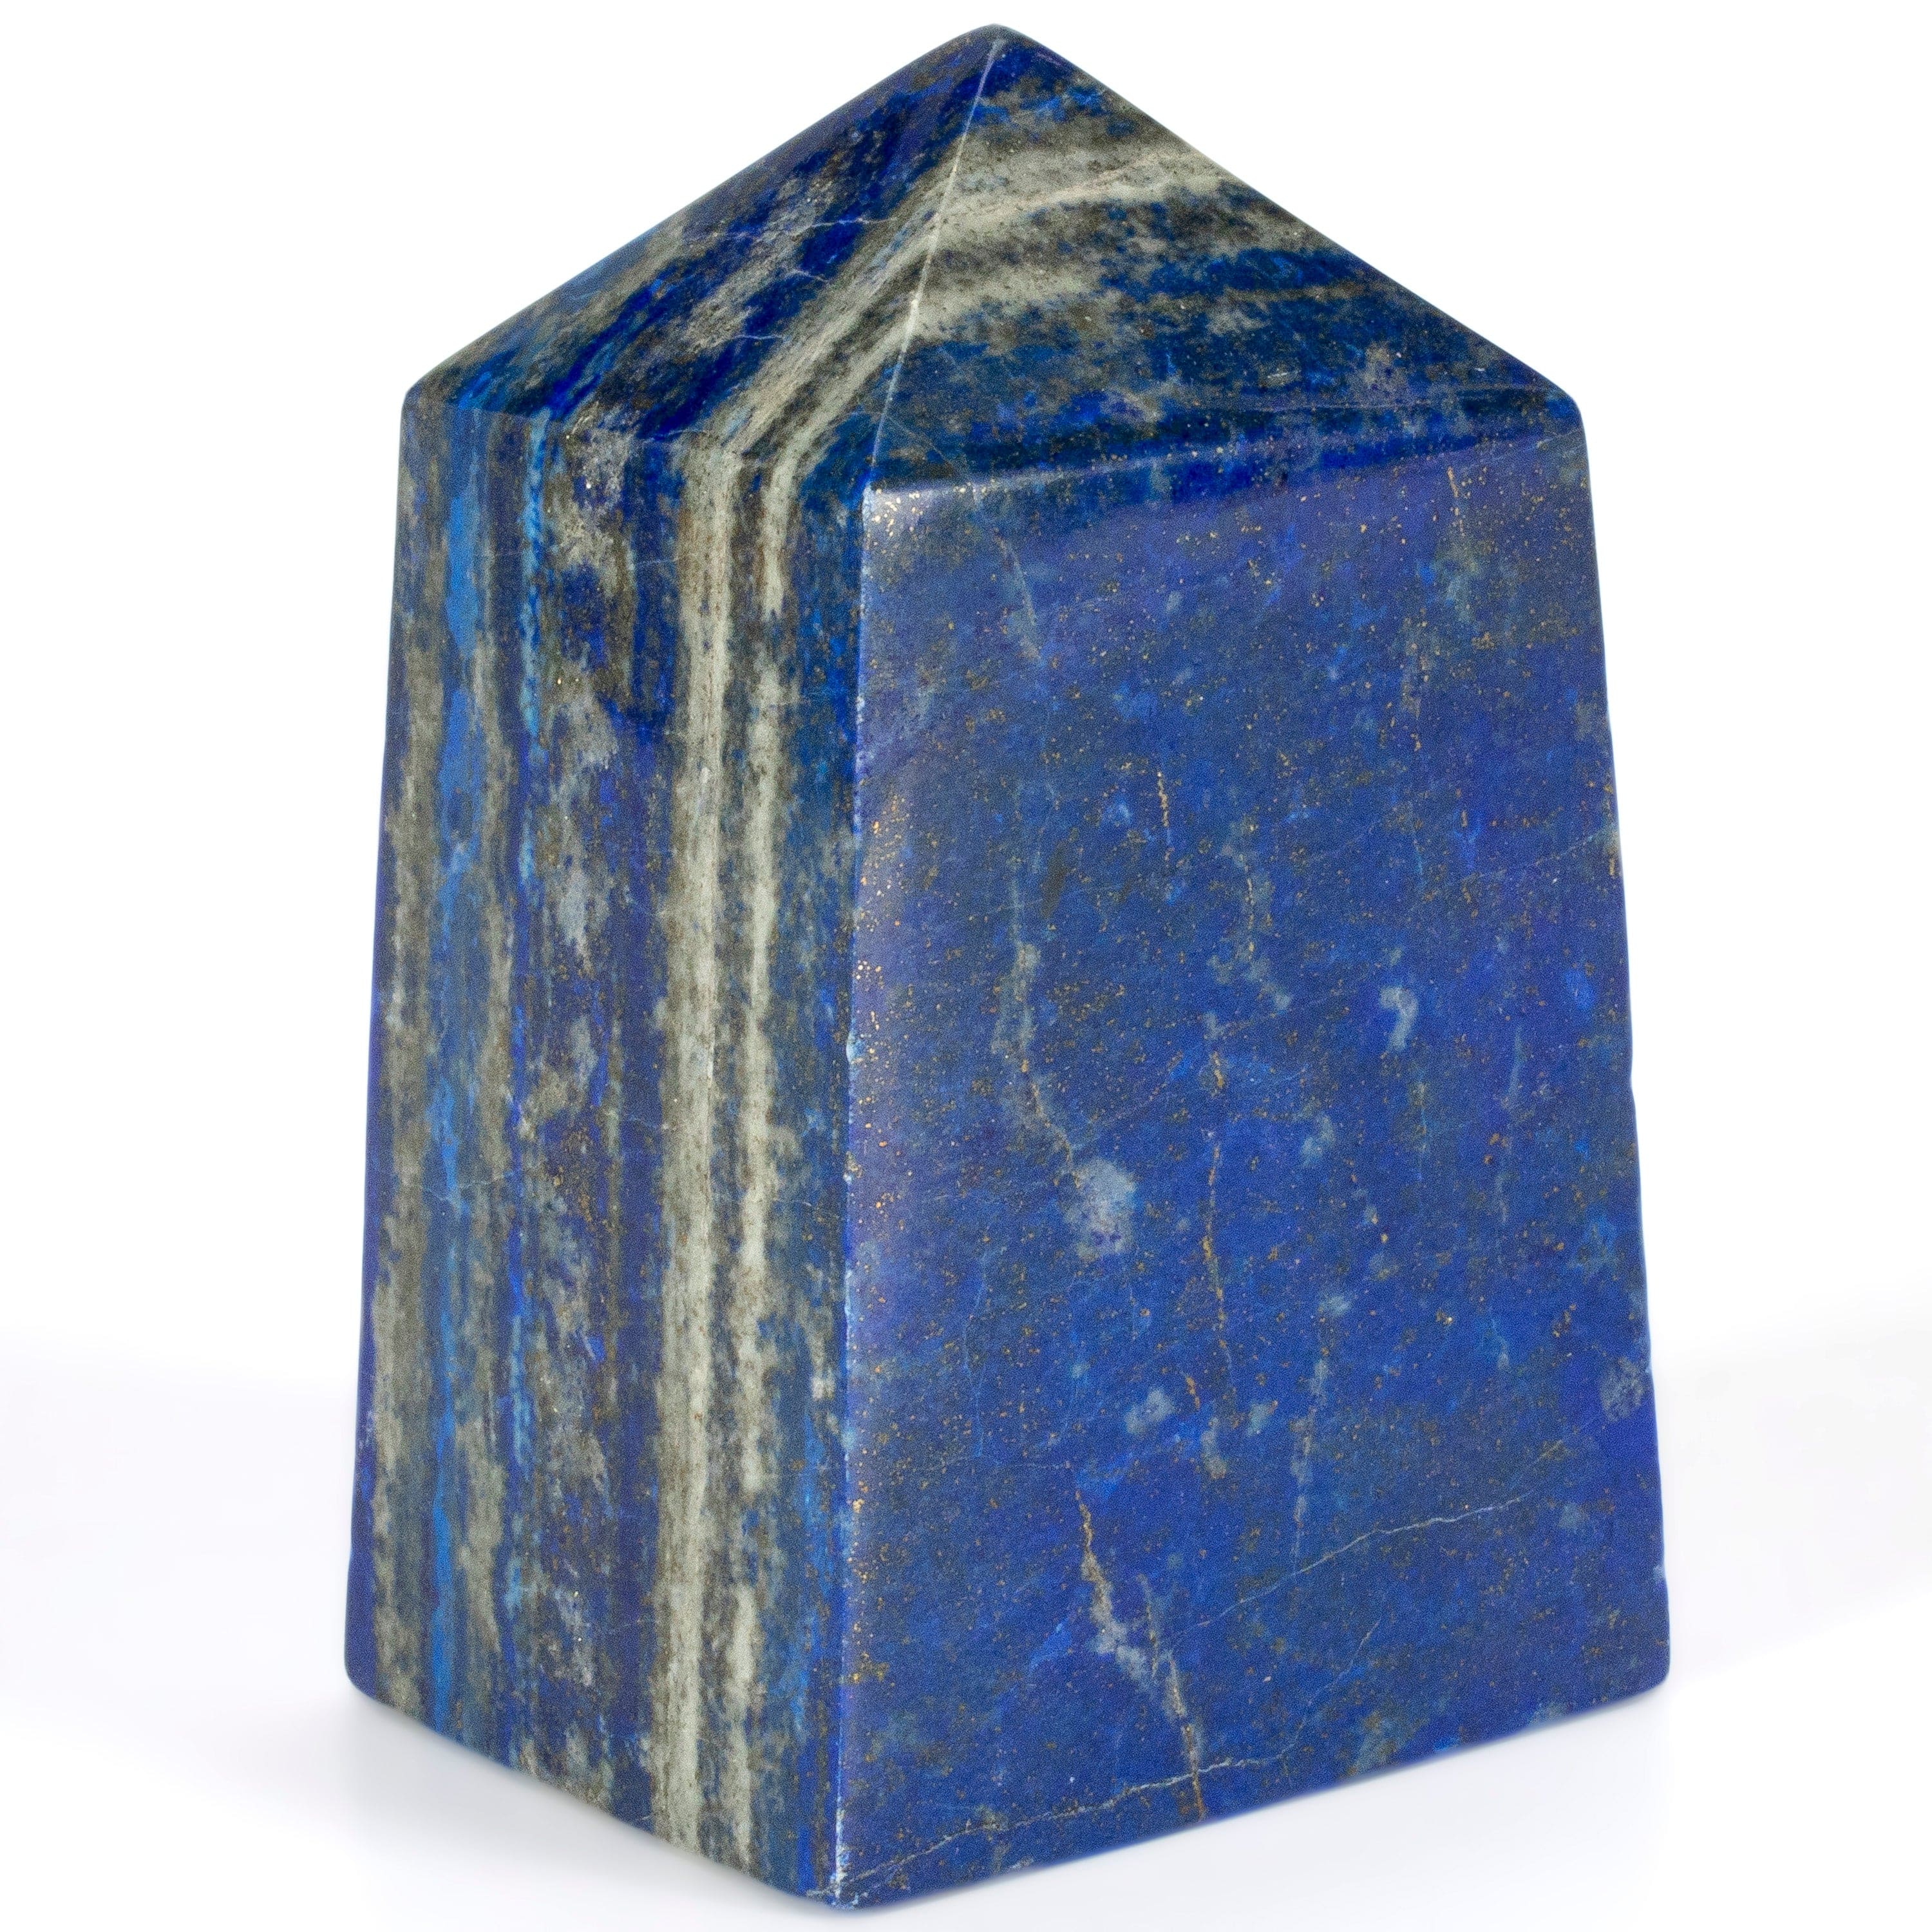 Kalifano Lapis Lapis Lazuli Polished Obelisk from Afghanistan - 4" / 781 grams LPOB1600.001